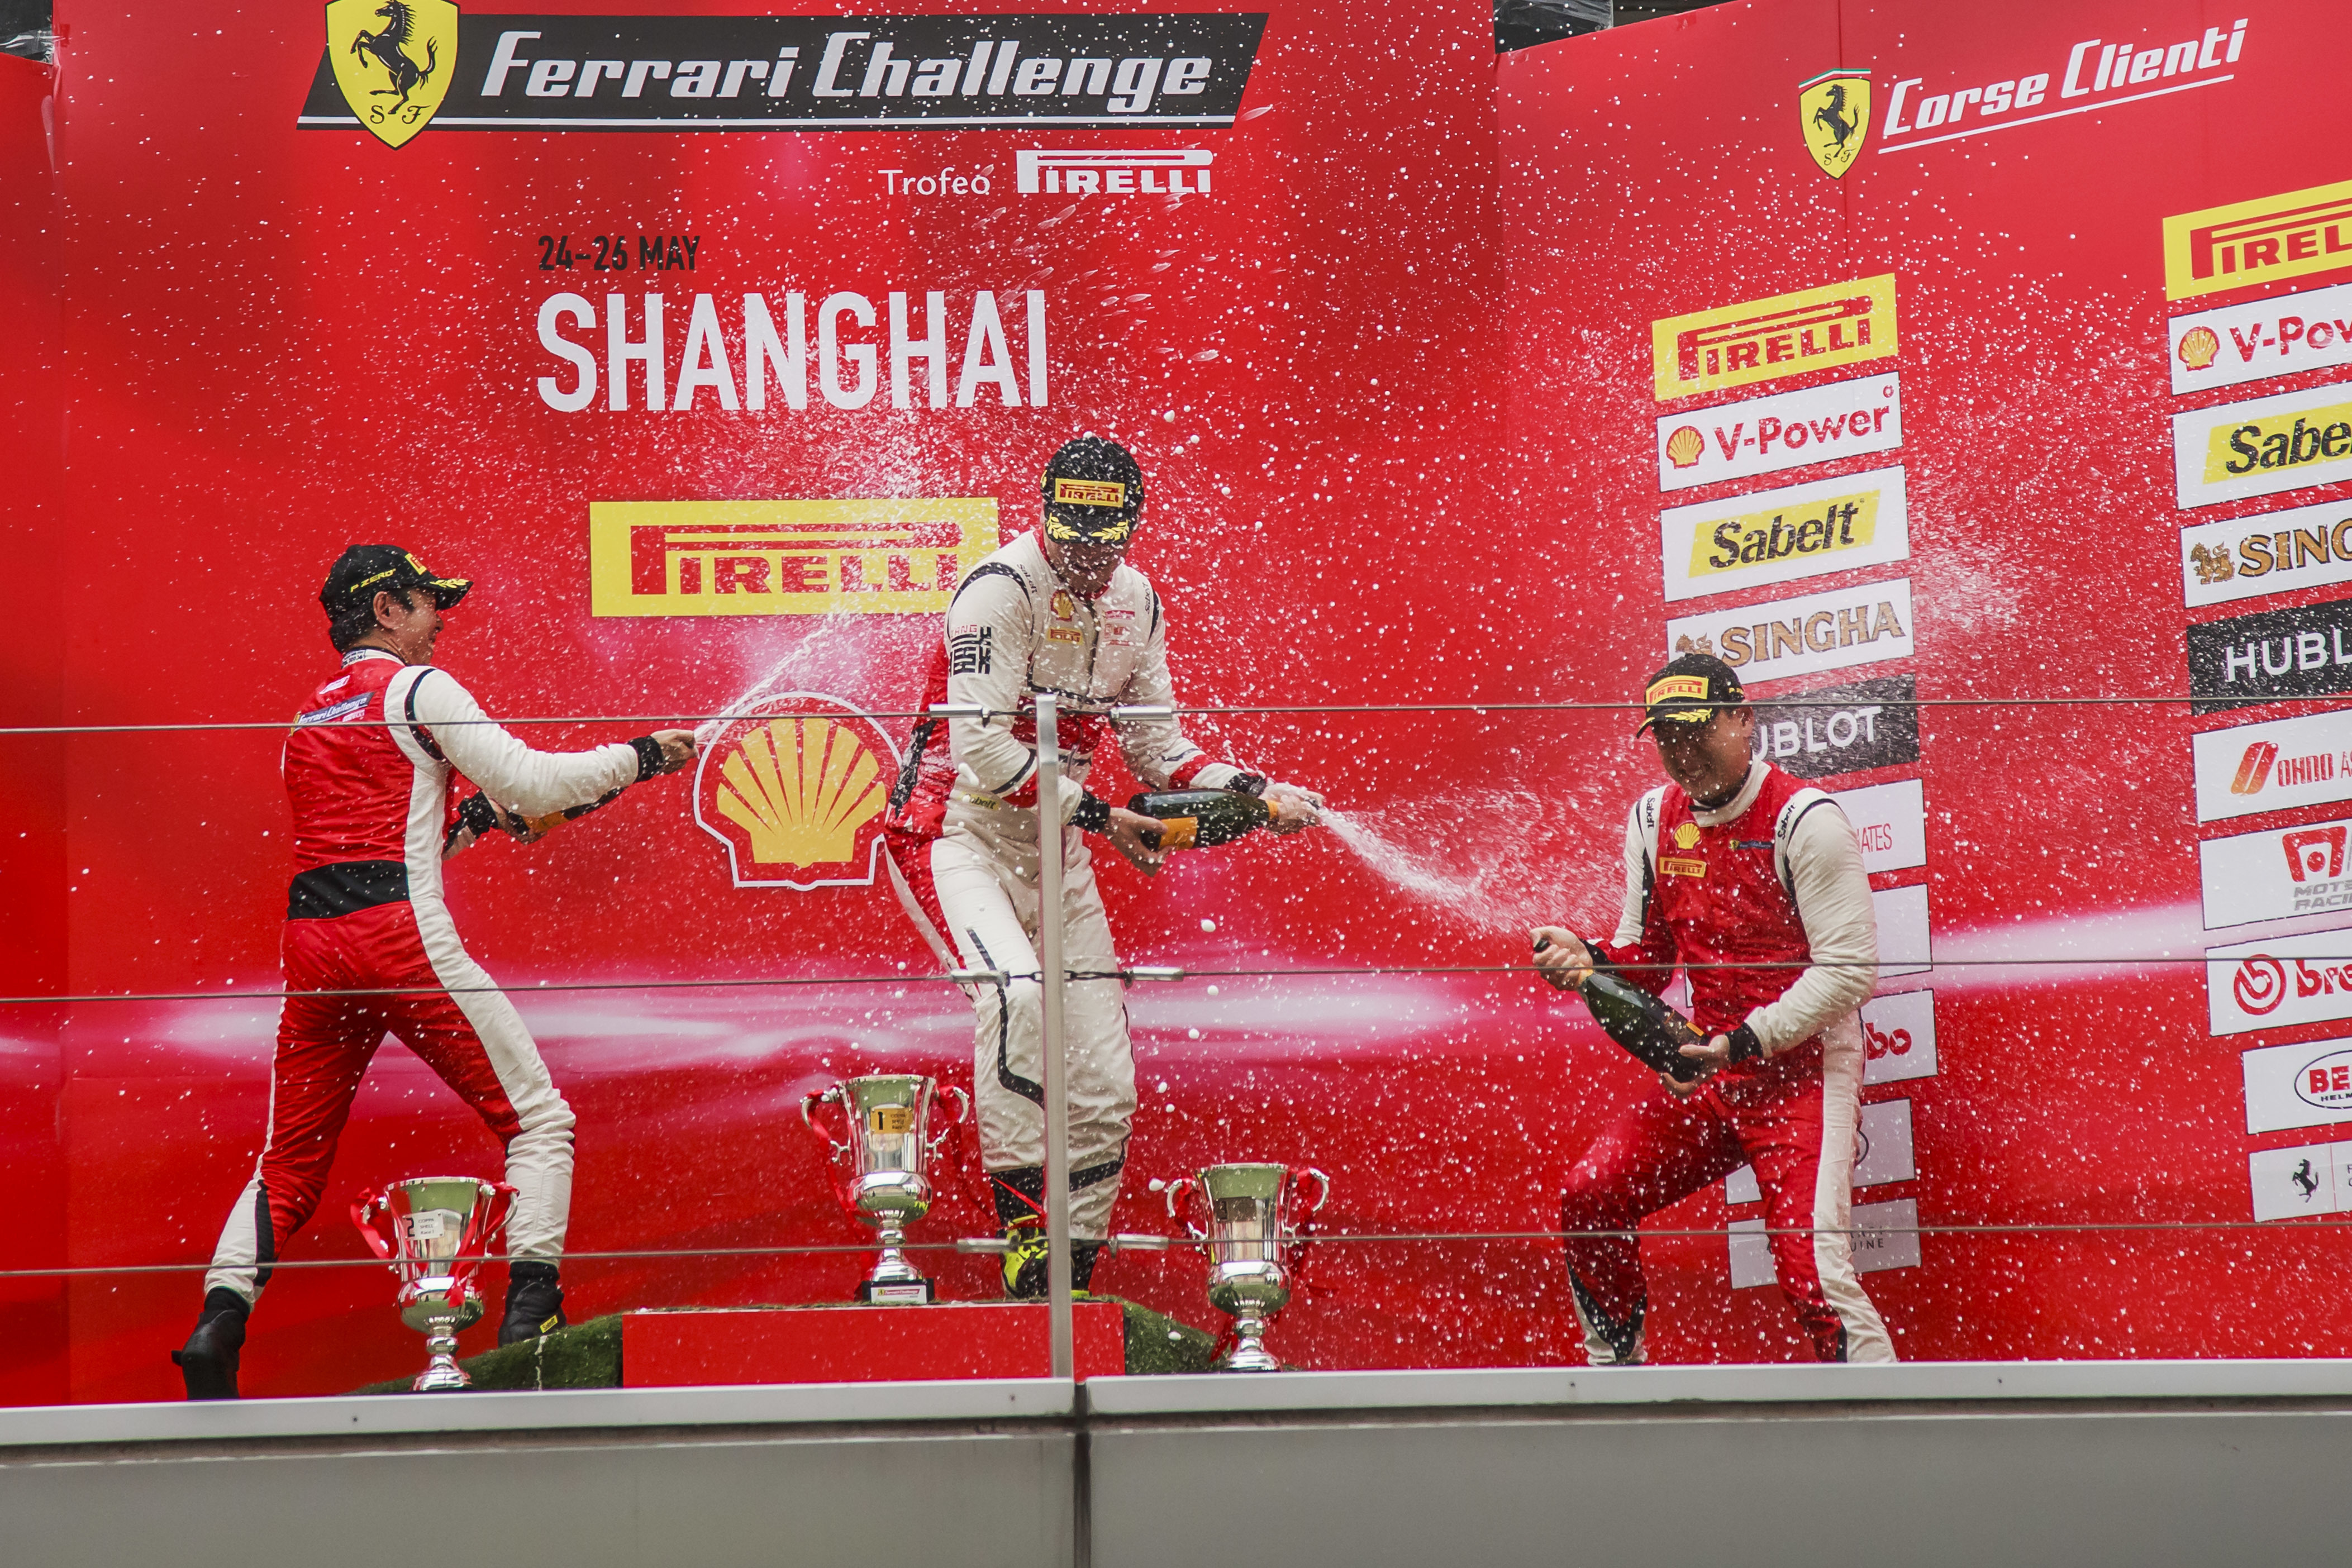 Ferrari Challenge | Shanghai